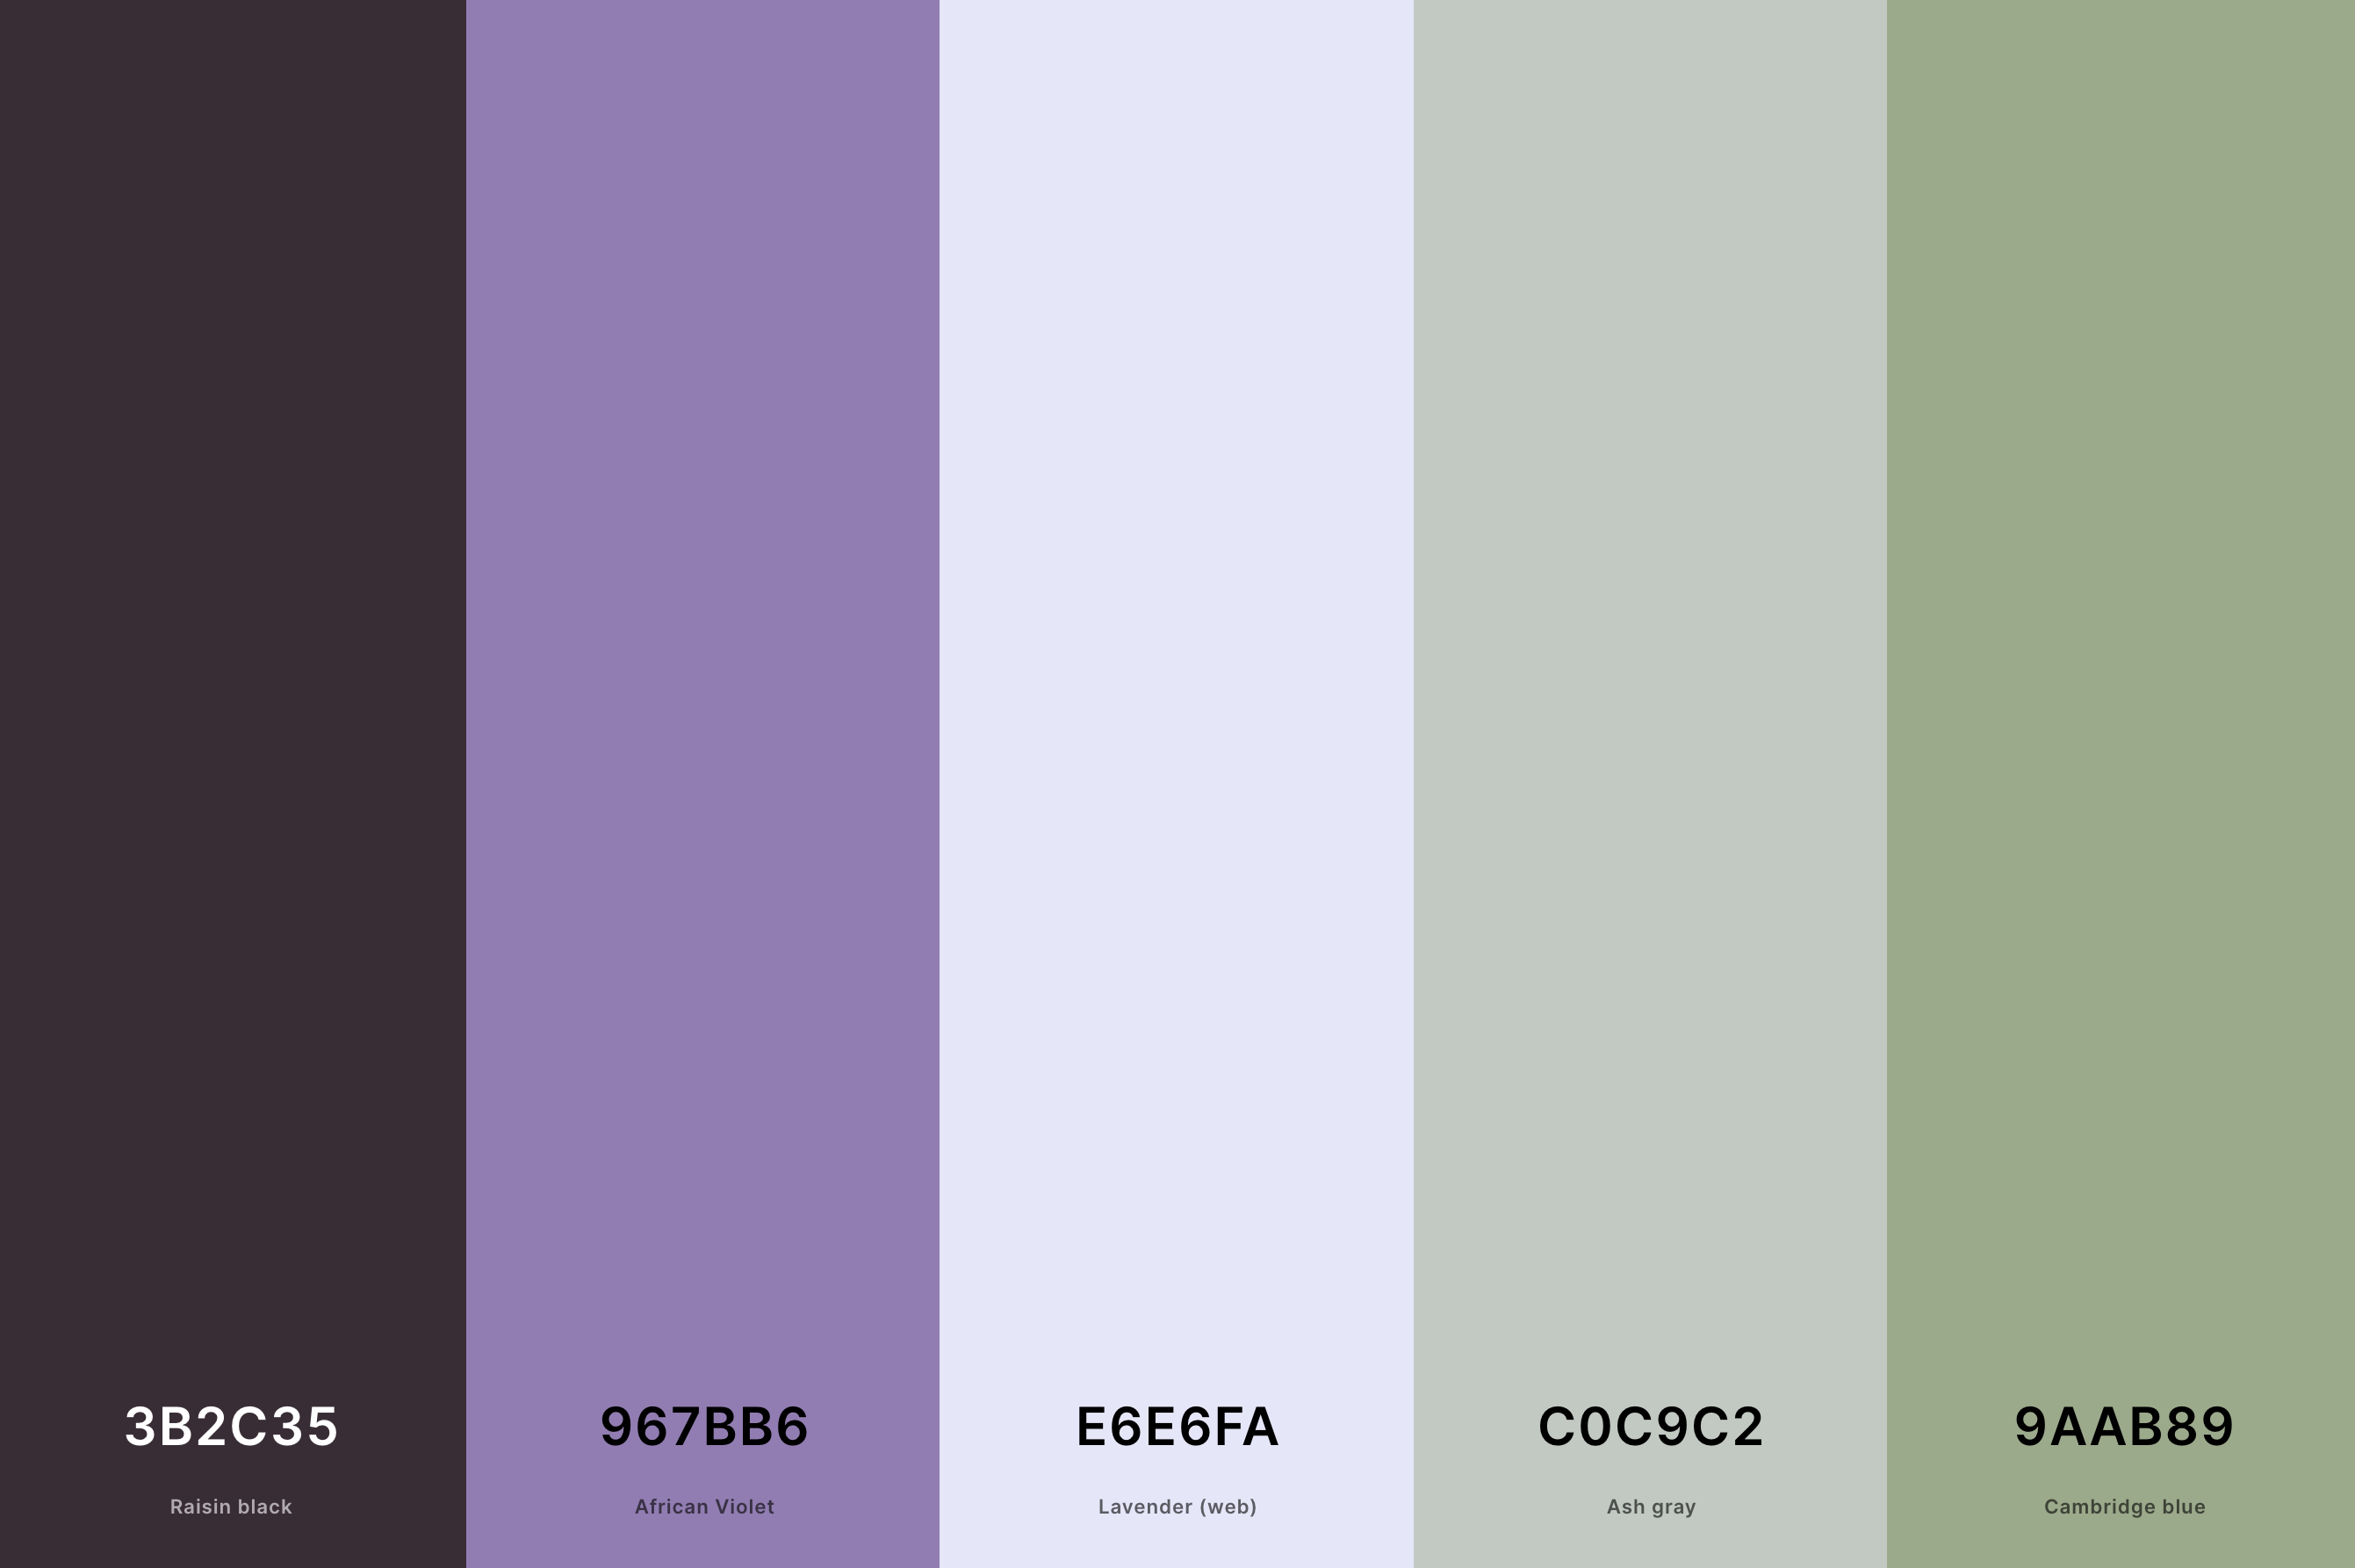 7. Lavender And Sage Green Color Palette Color Palette with Raisin Black (Hex #3B2C35) + African Violet (Hex #967BB6) + Lavender (Web) (Hex #E6E6FA) + Ash Gray (Hex #C0C9C2) + Cambridge Blue (Hex #9AAB89) Color Palette with Hex Codes